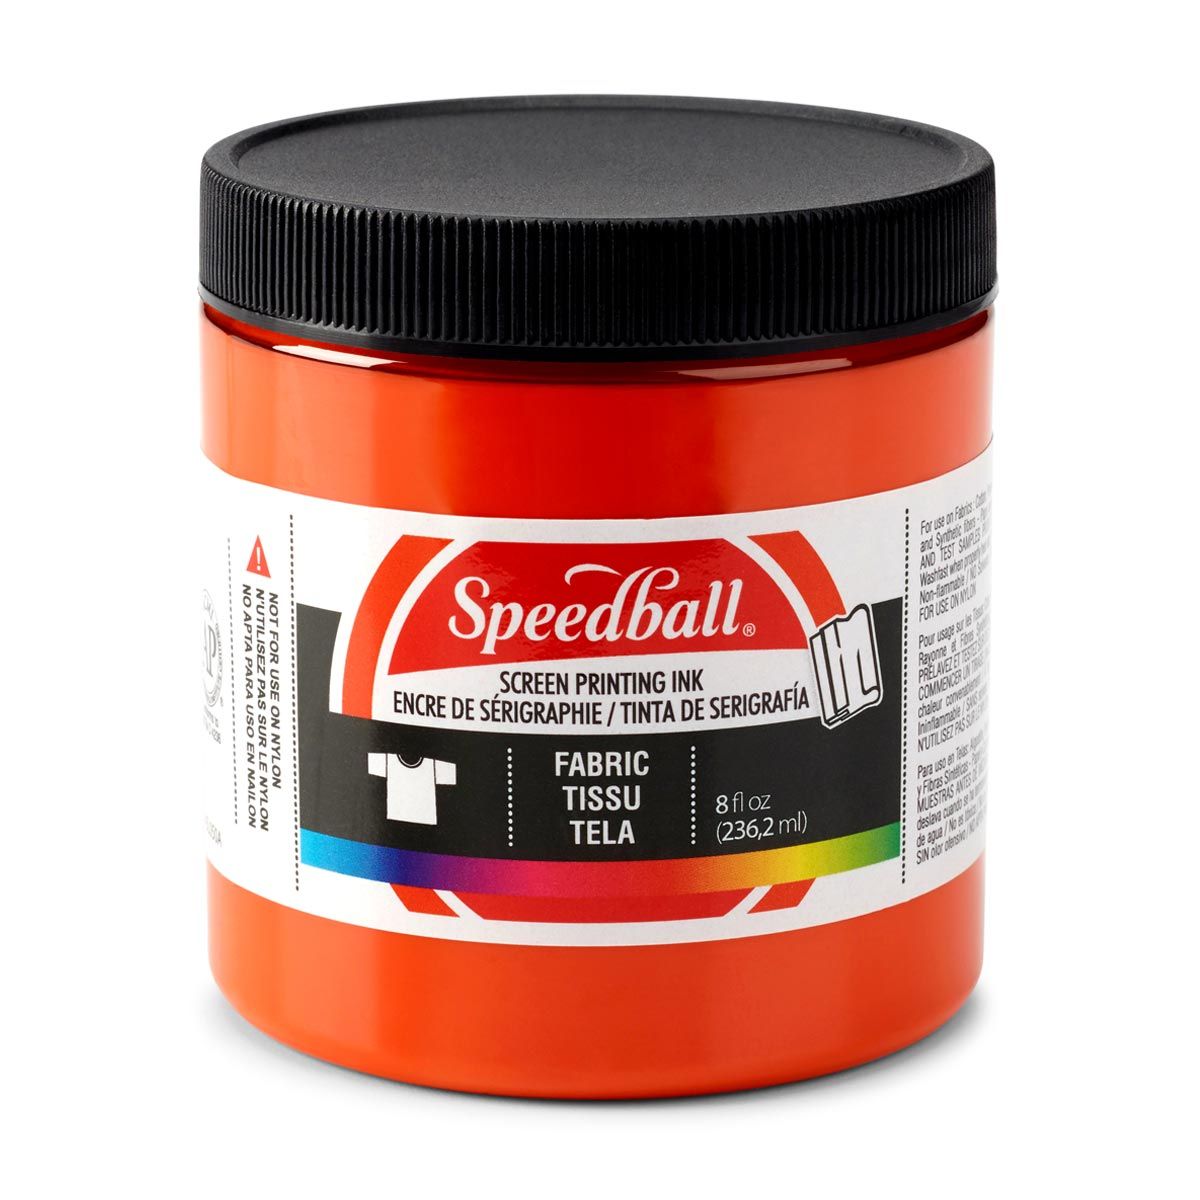 Speedball Fabric Screen Printing Ink - Orange 8oz